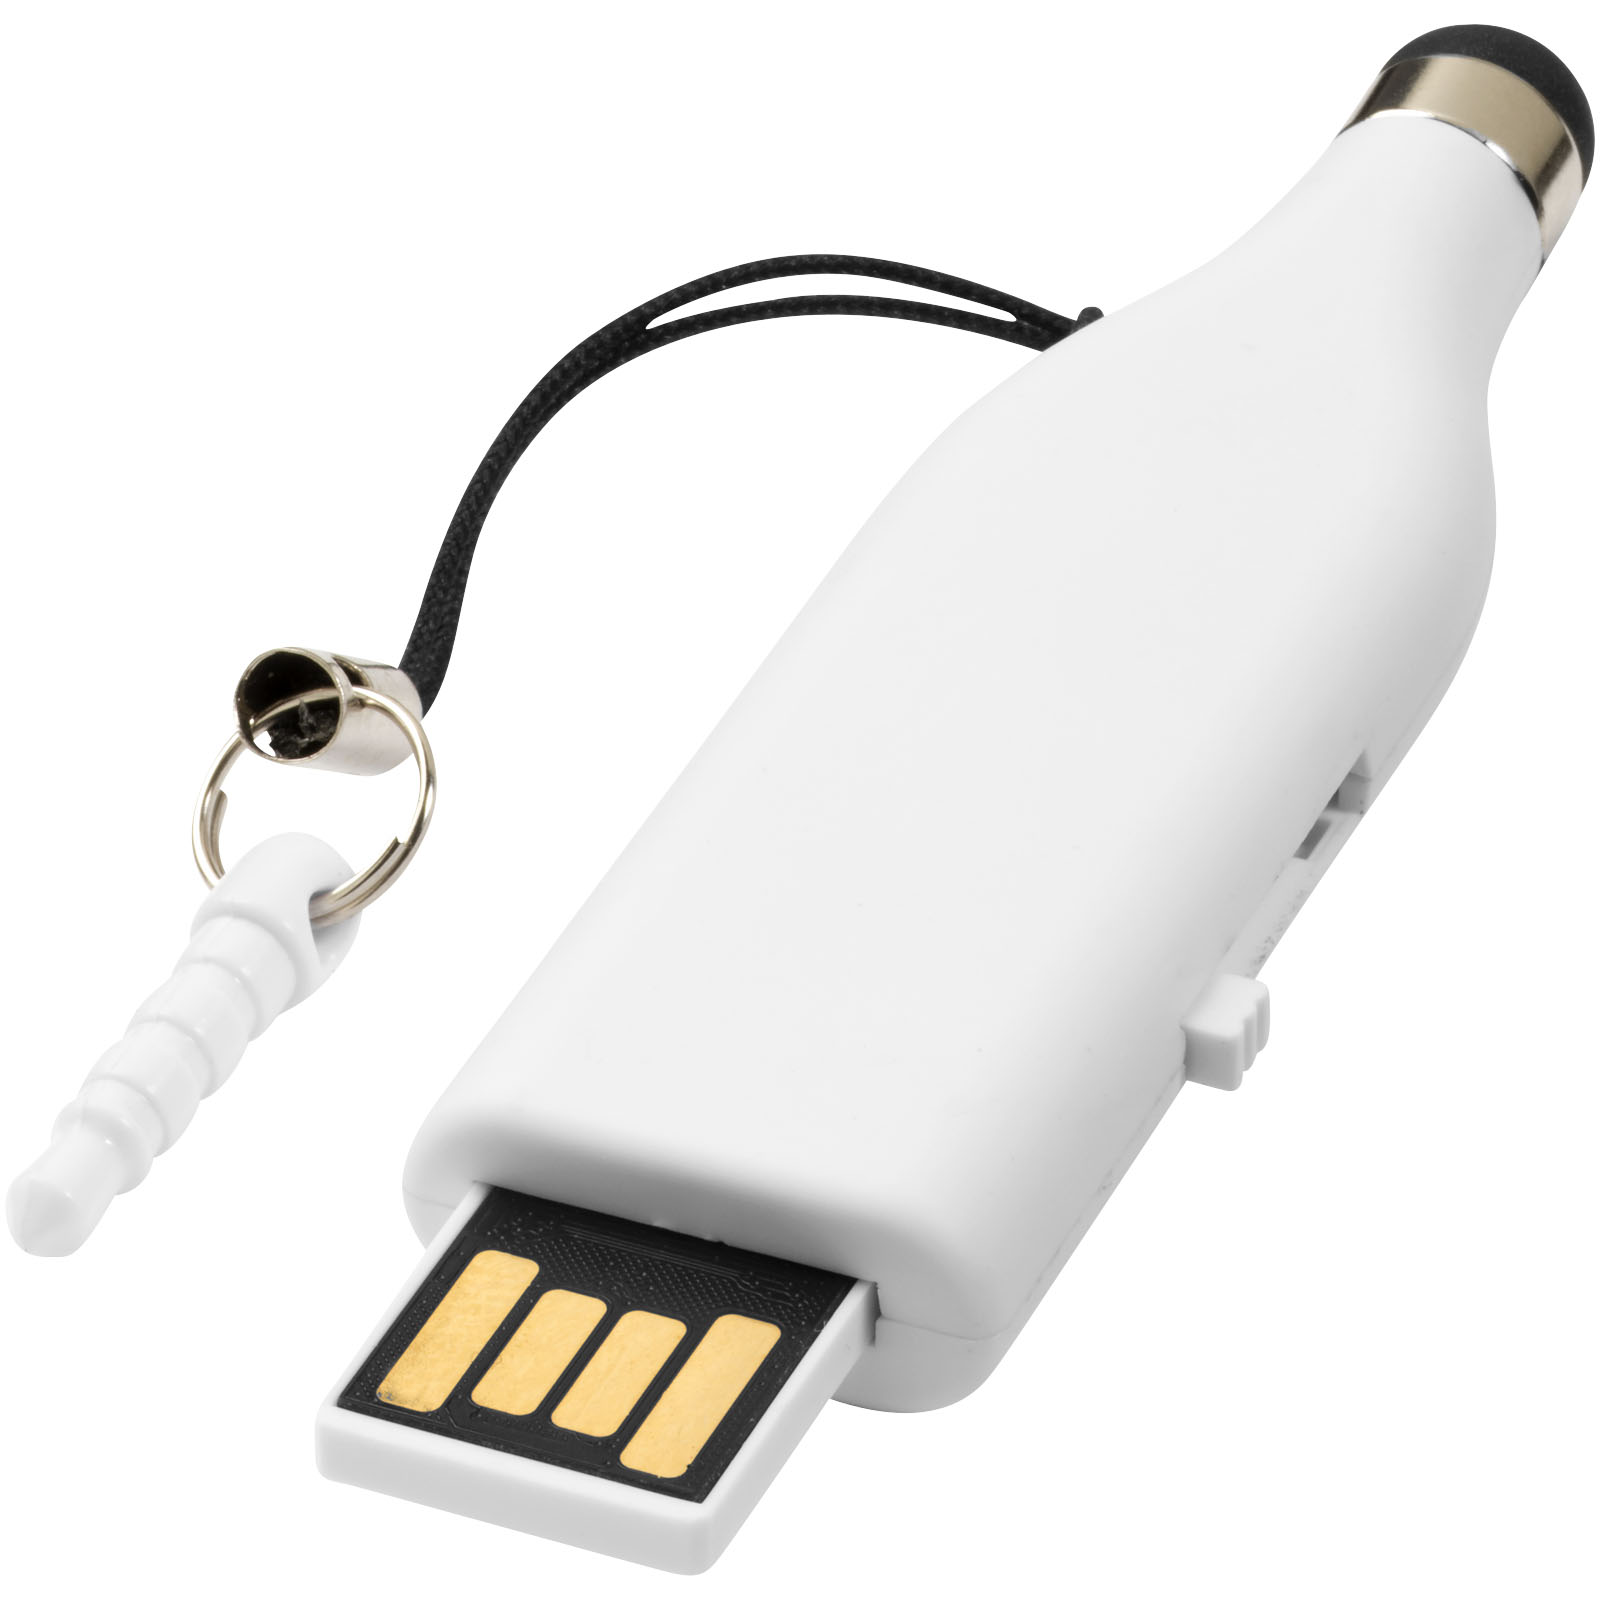 TouchPen USB - Zaprinta France